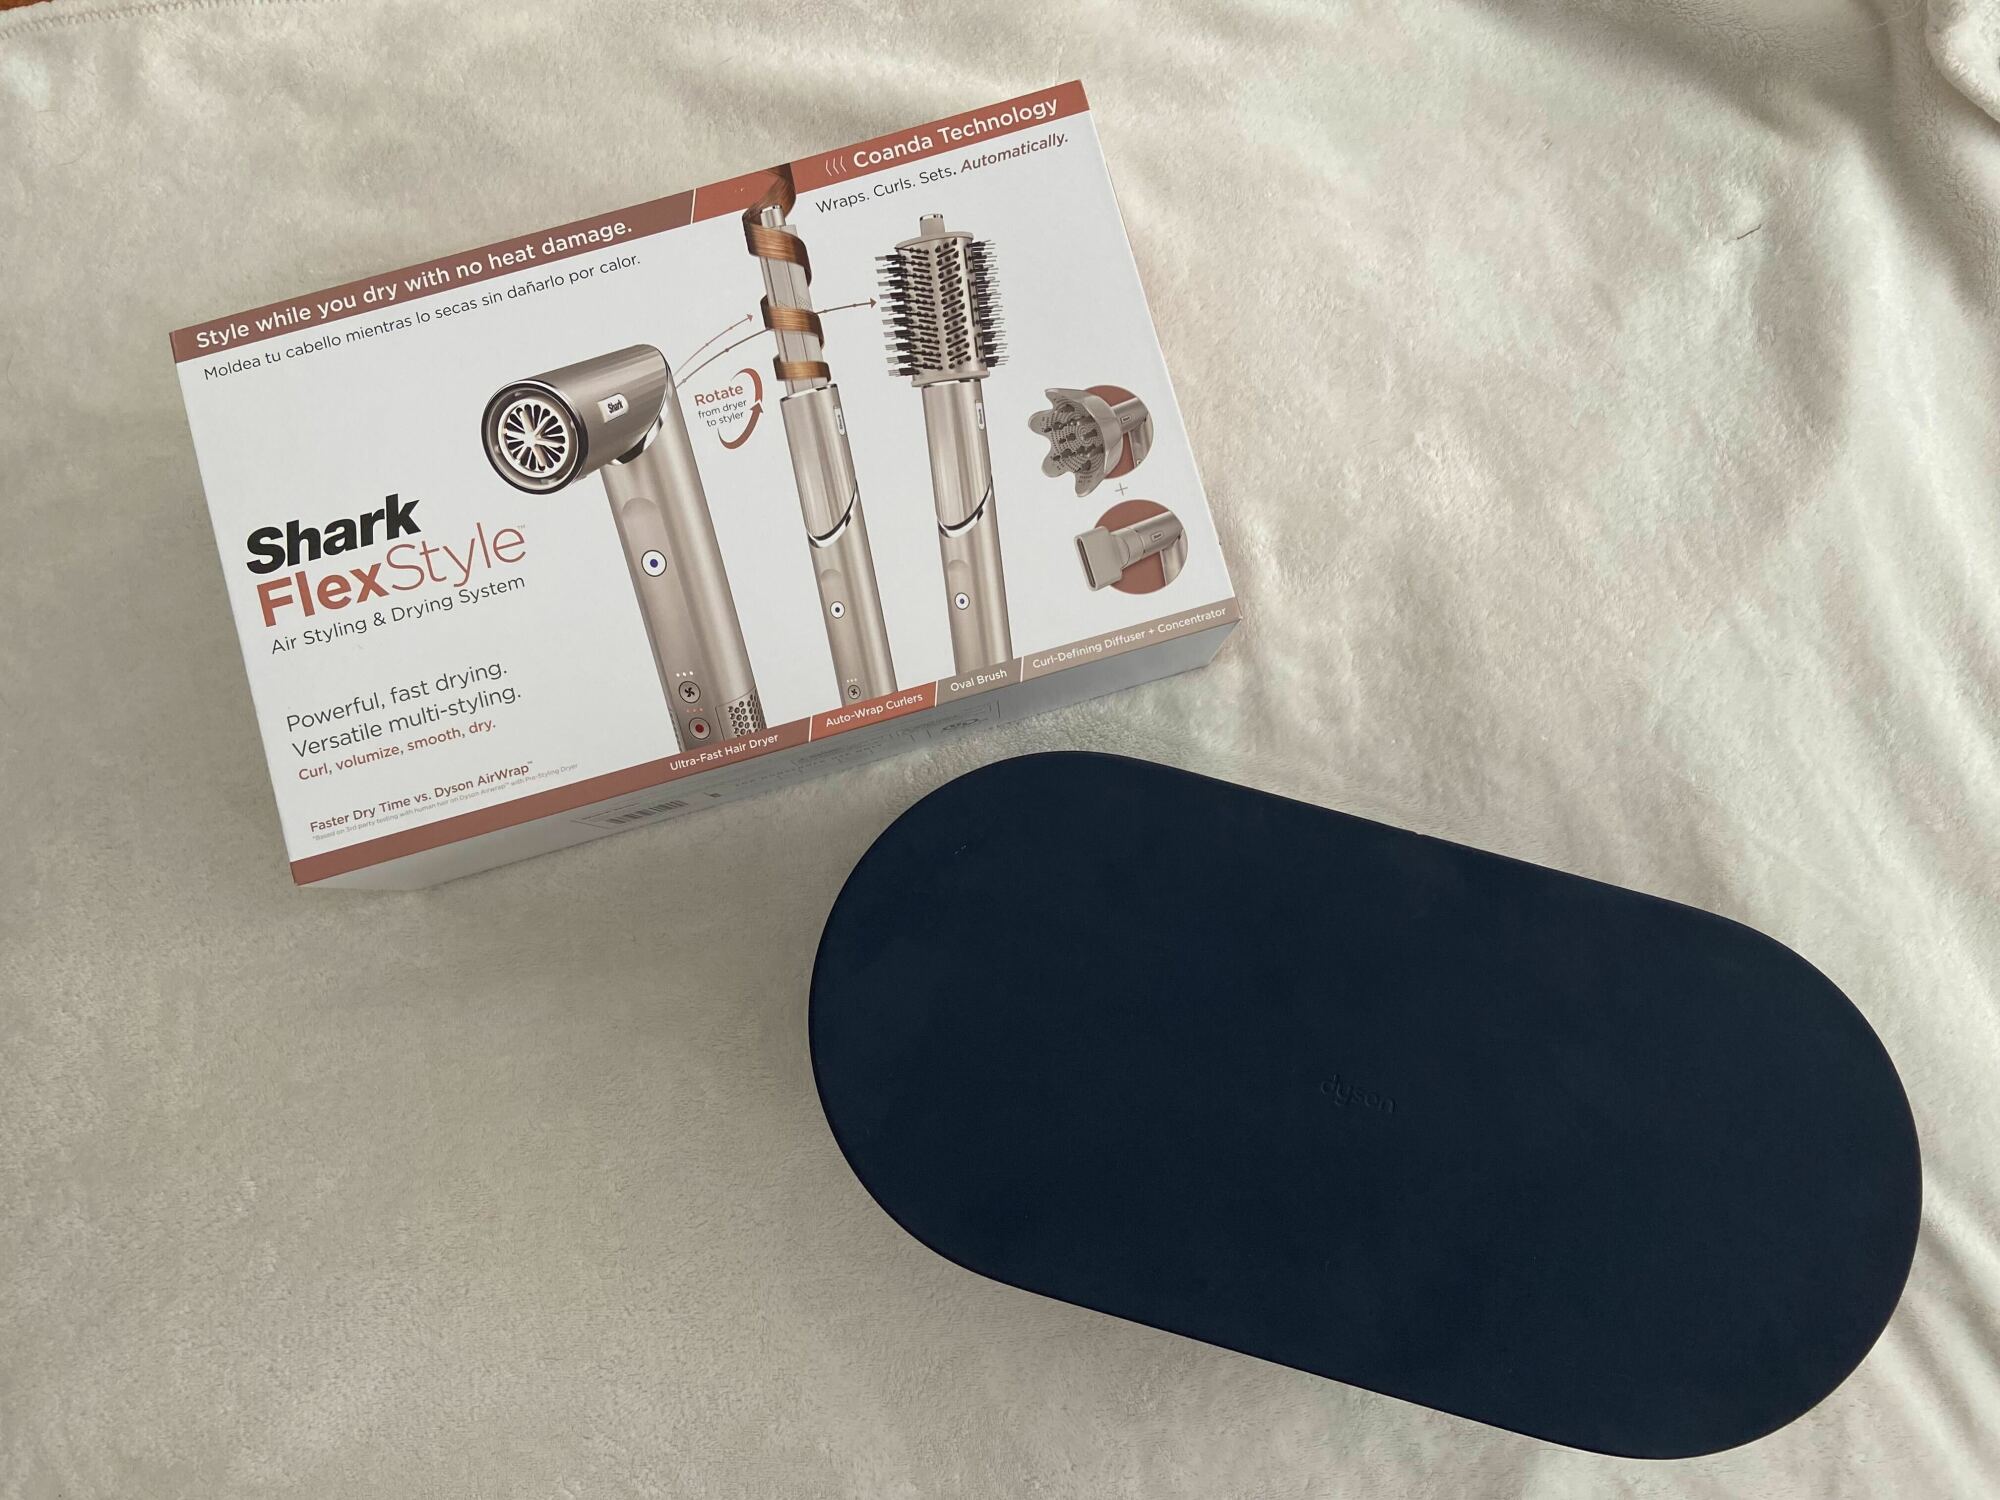 shark flexstyle box next to dark blue dyson airwrap case